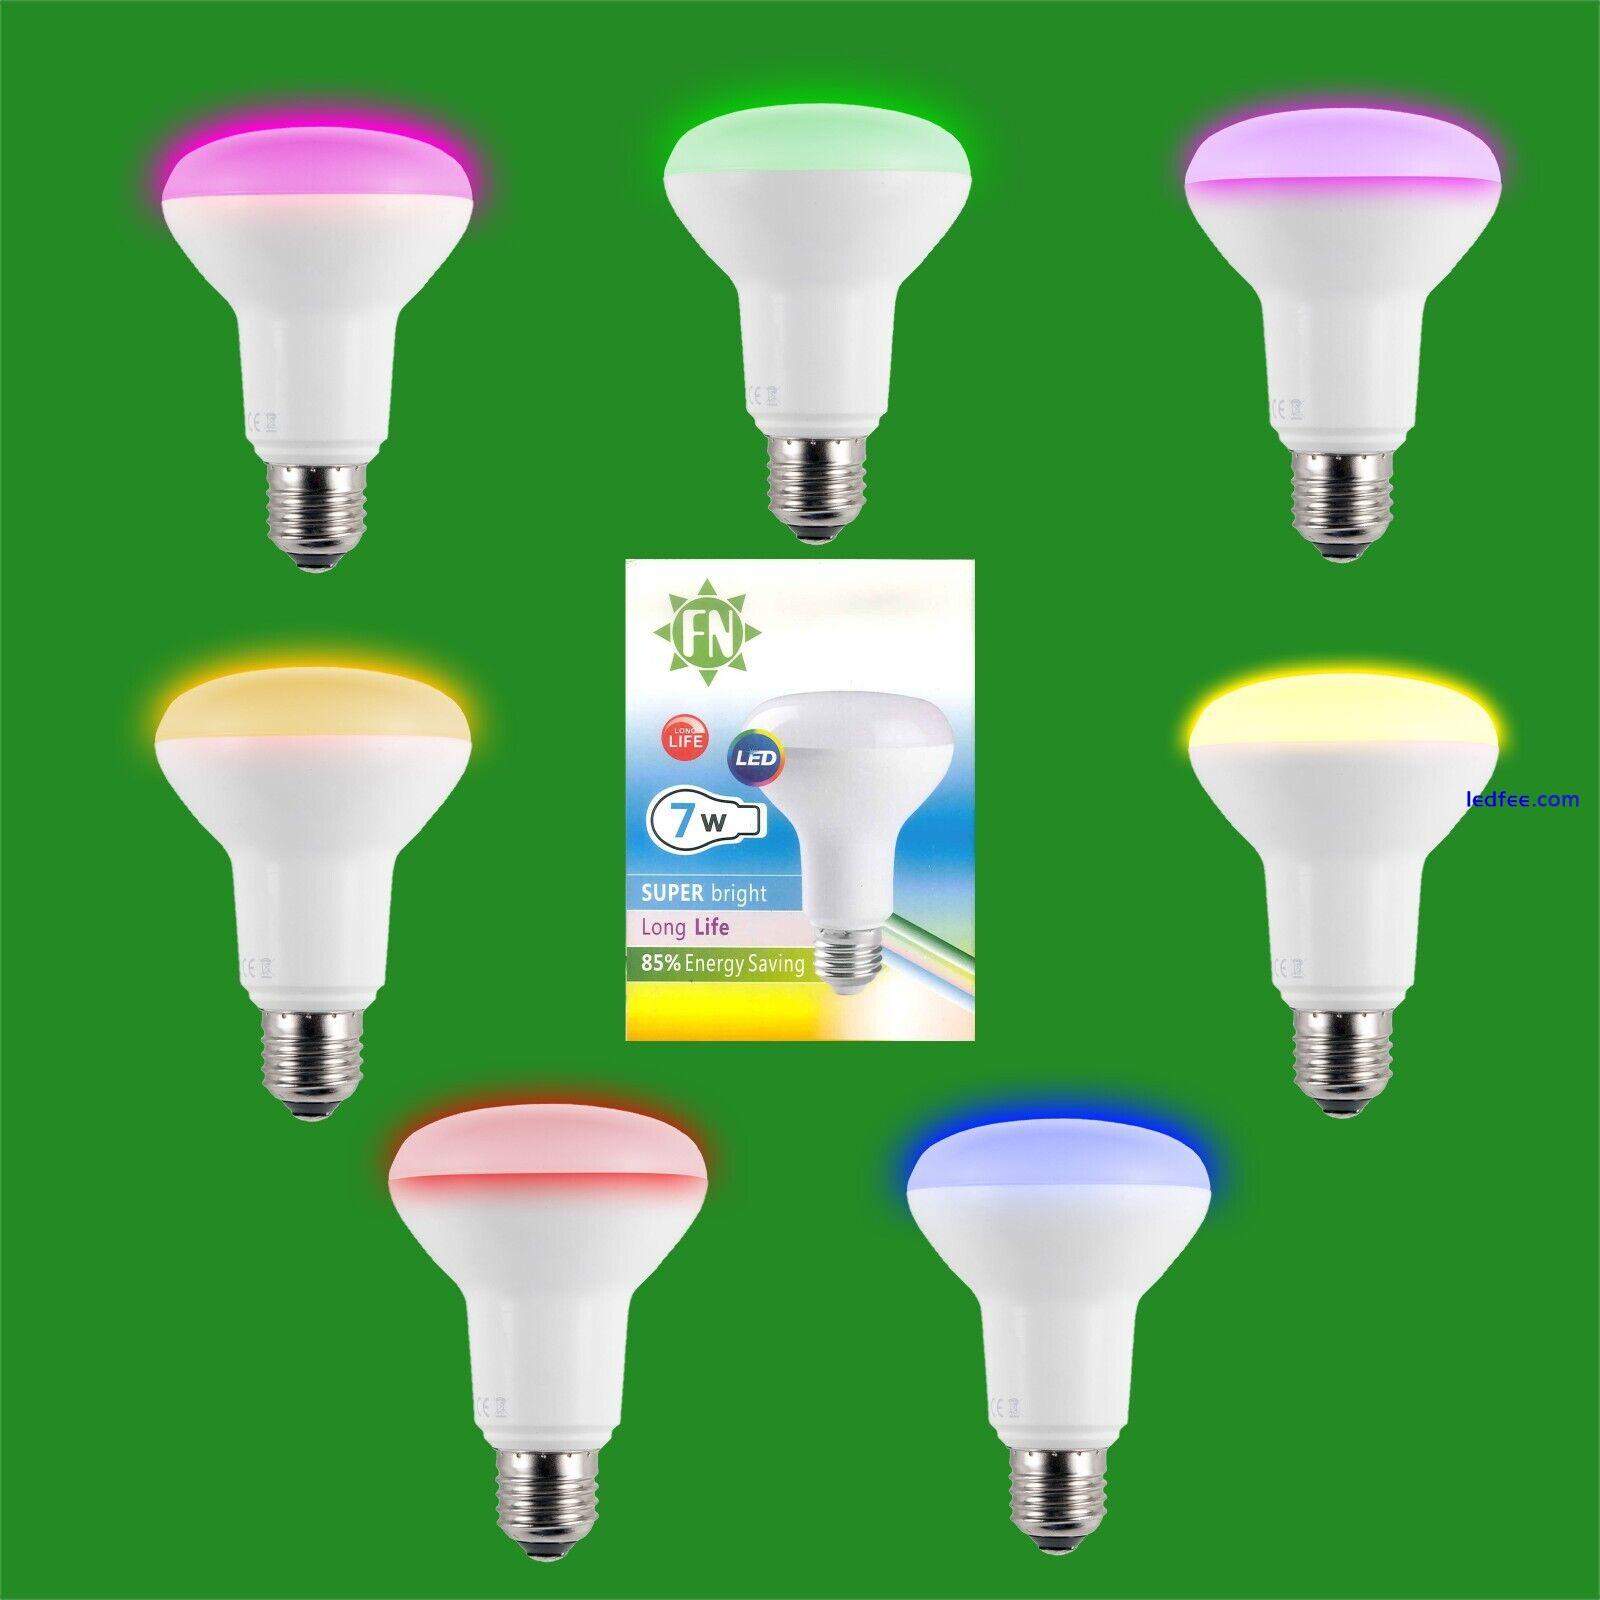 4x 7W LED R80 Coloured Reflector Disco Party Spot Light Bulbs ES E27 Screw Lamp 0 